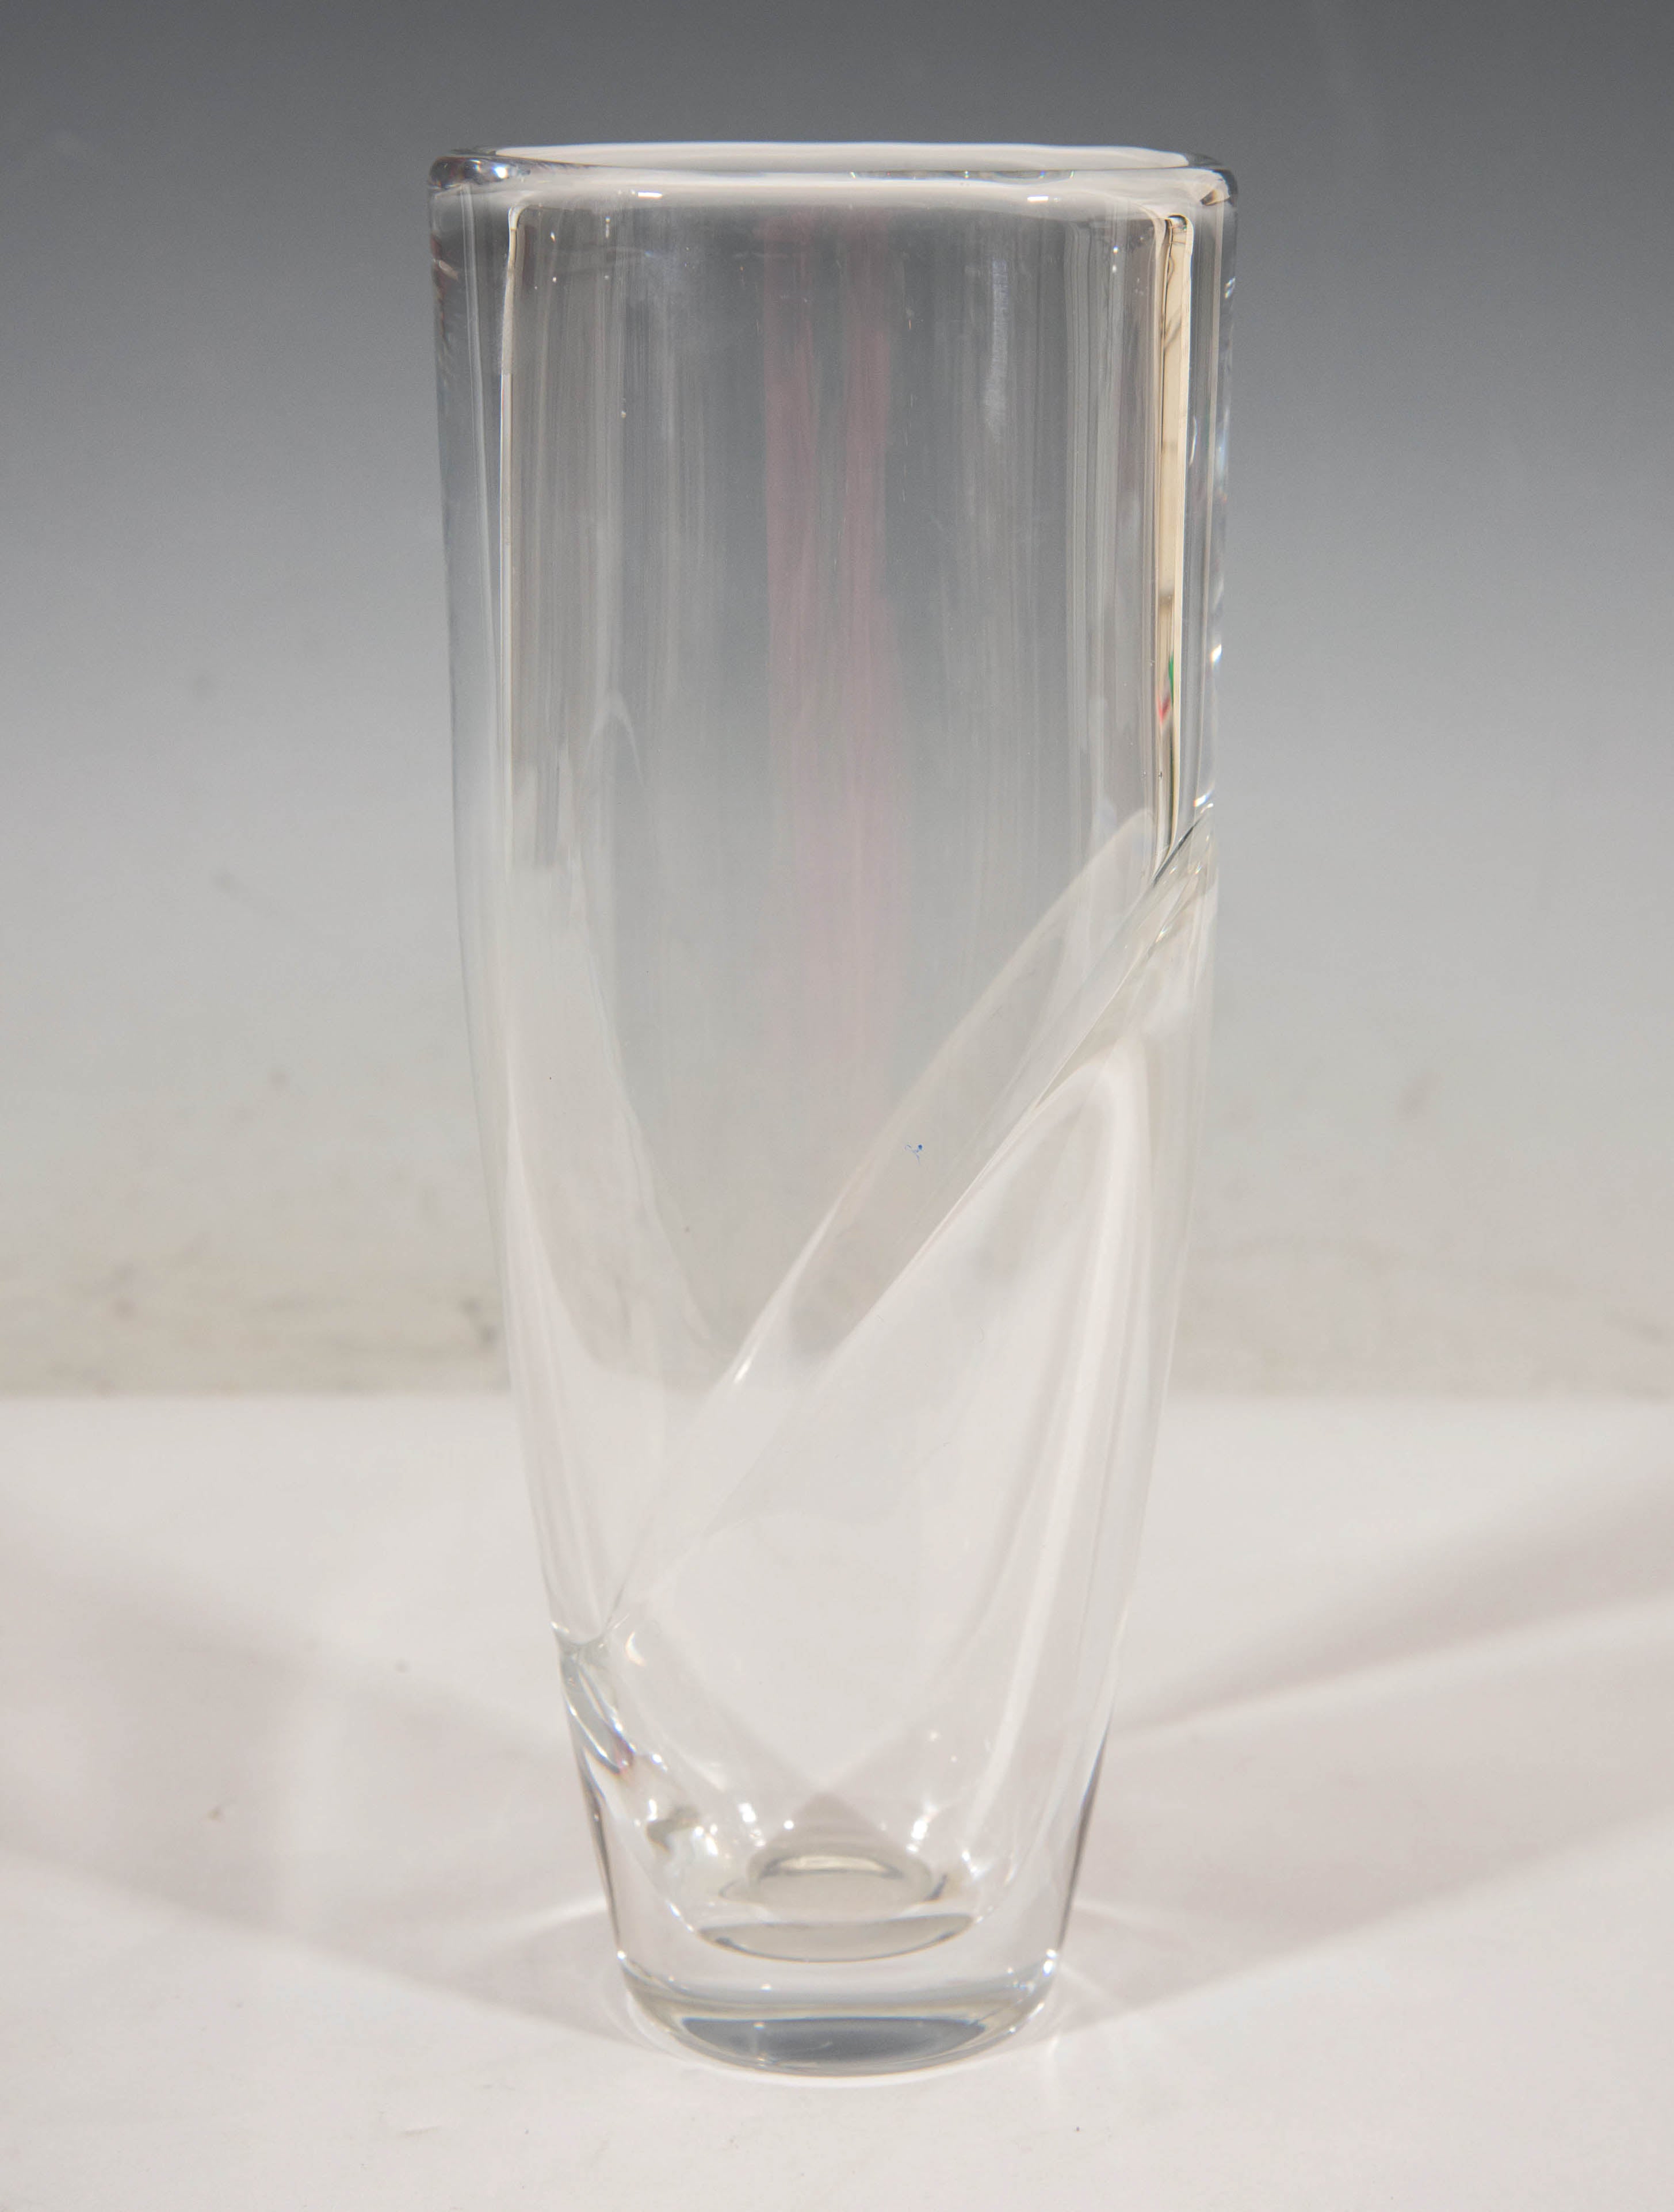 Sven Palmquist Art Deco Cased Glass Crystal Vase for Orrefors